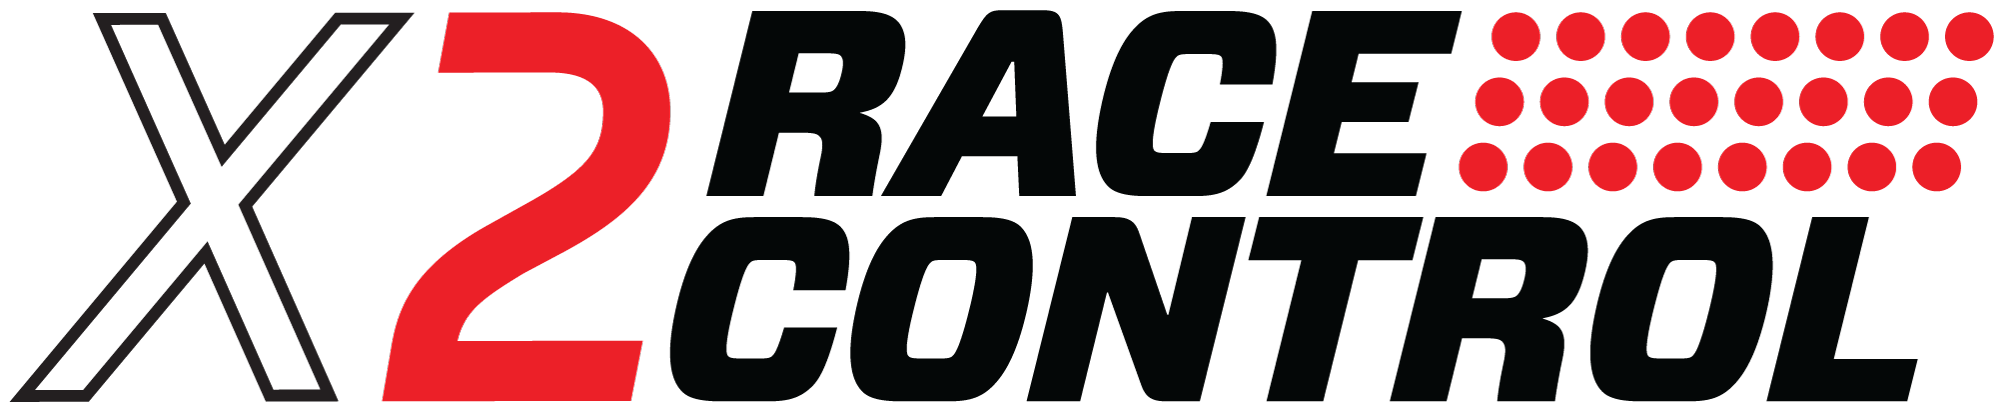 X2RaceControl_logo zwart